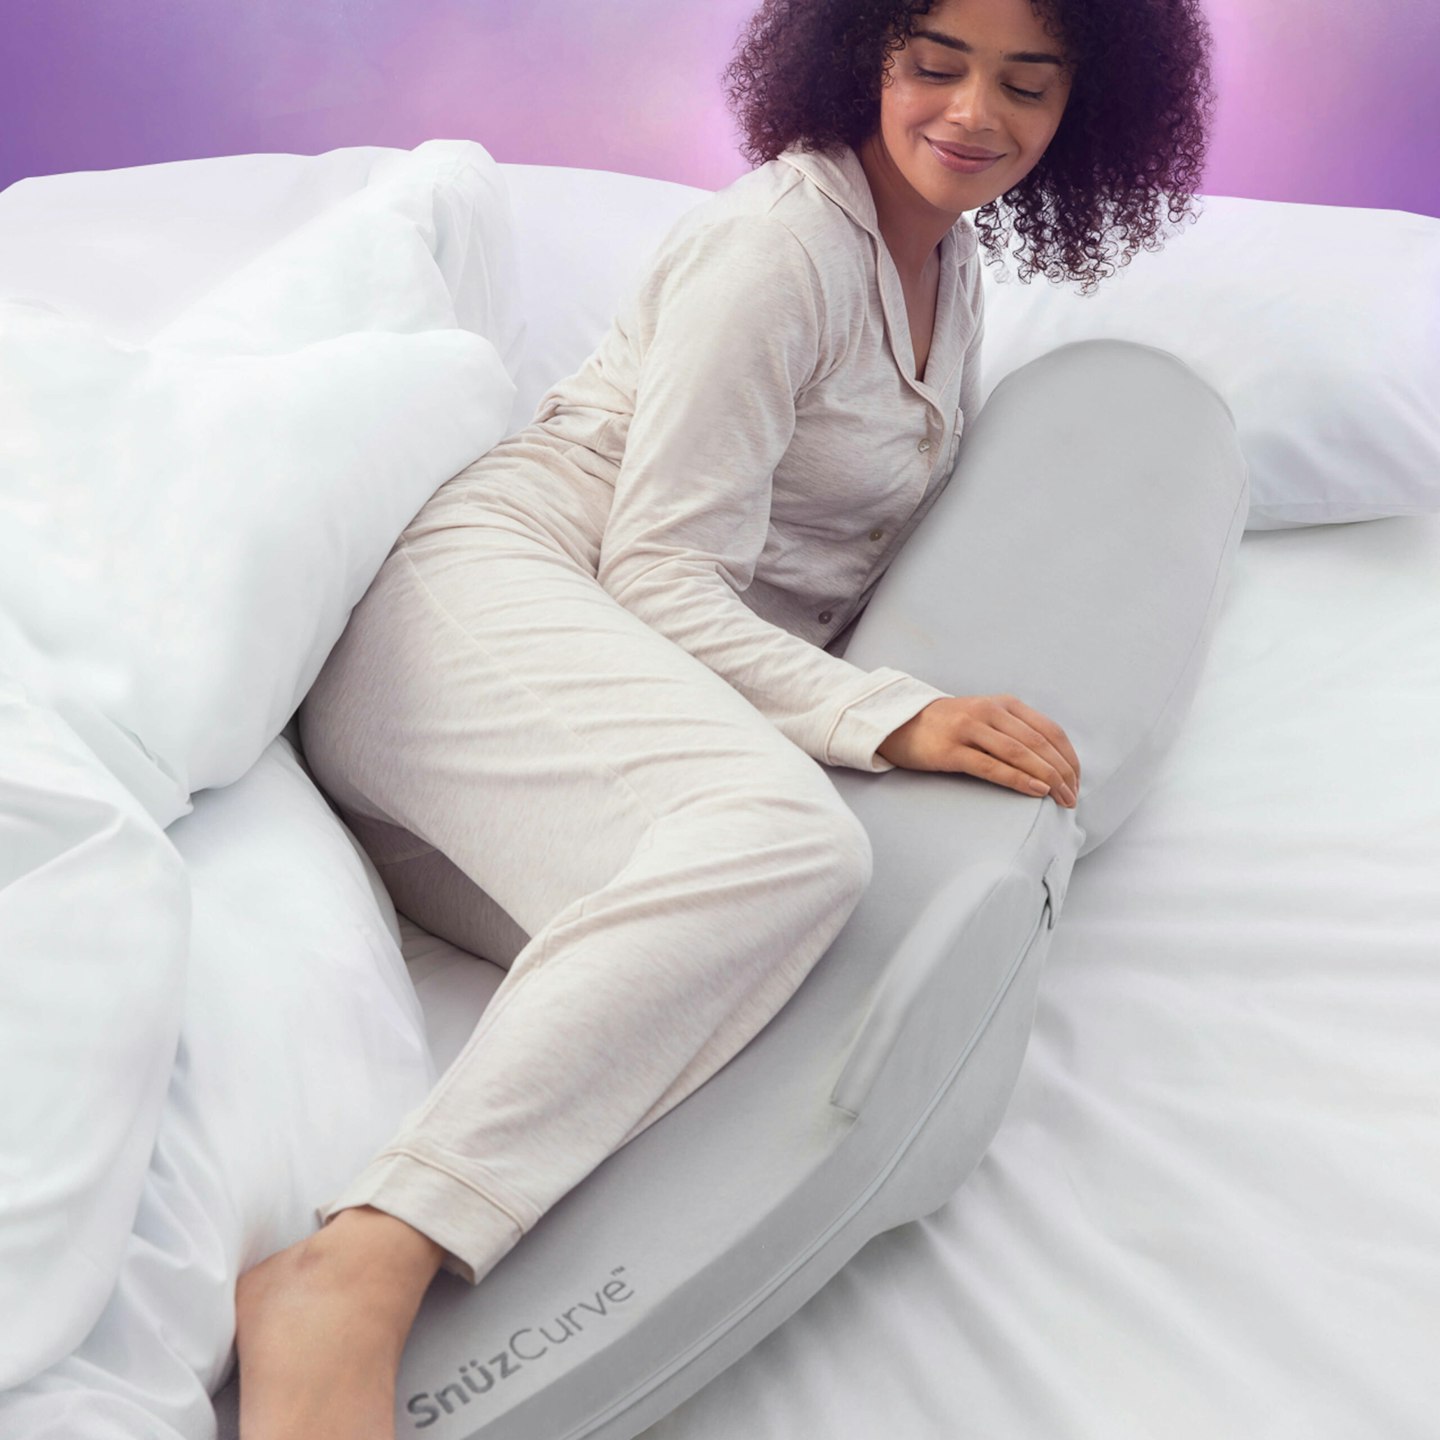 SnüzCurve Pregnancy Support Pillow